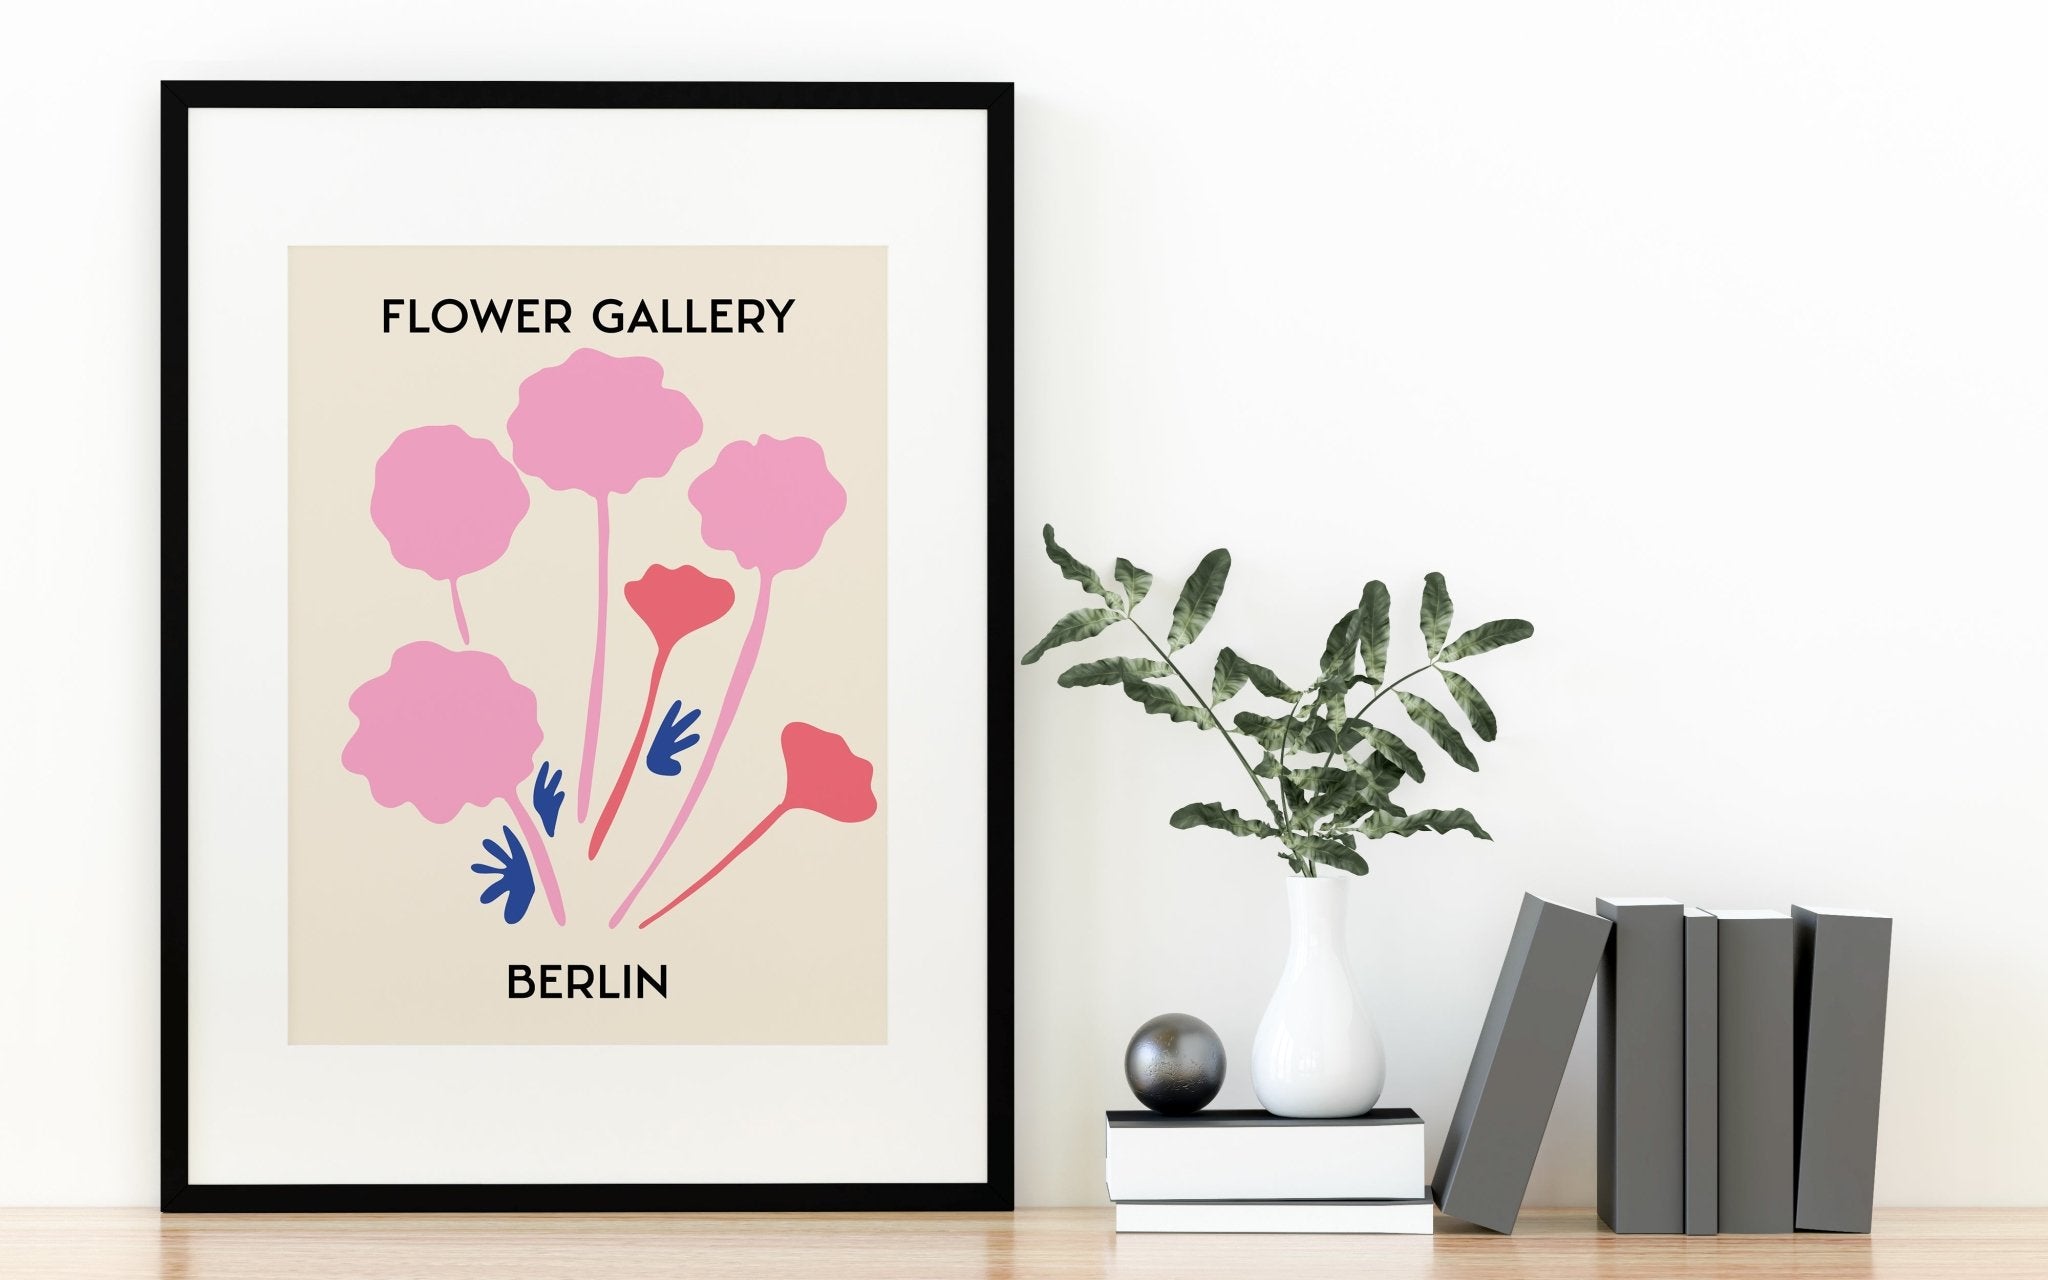 Flower Market Berlin Print